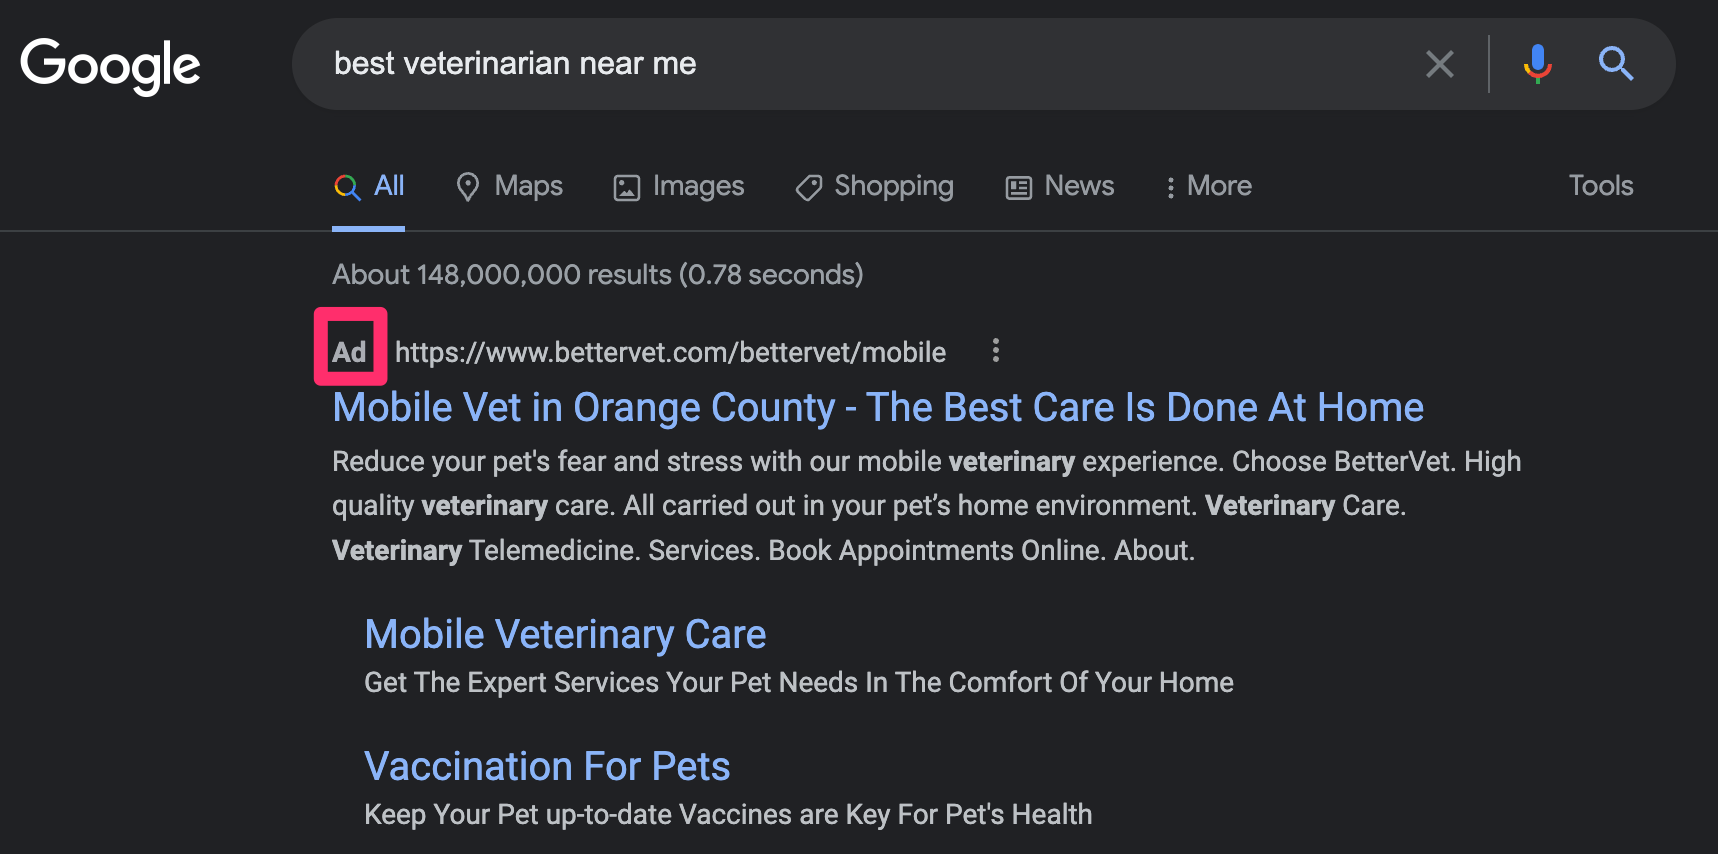 Google Ads for Veterinarians